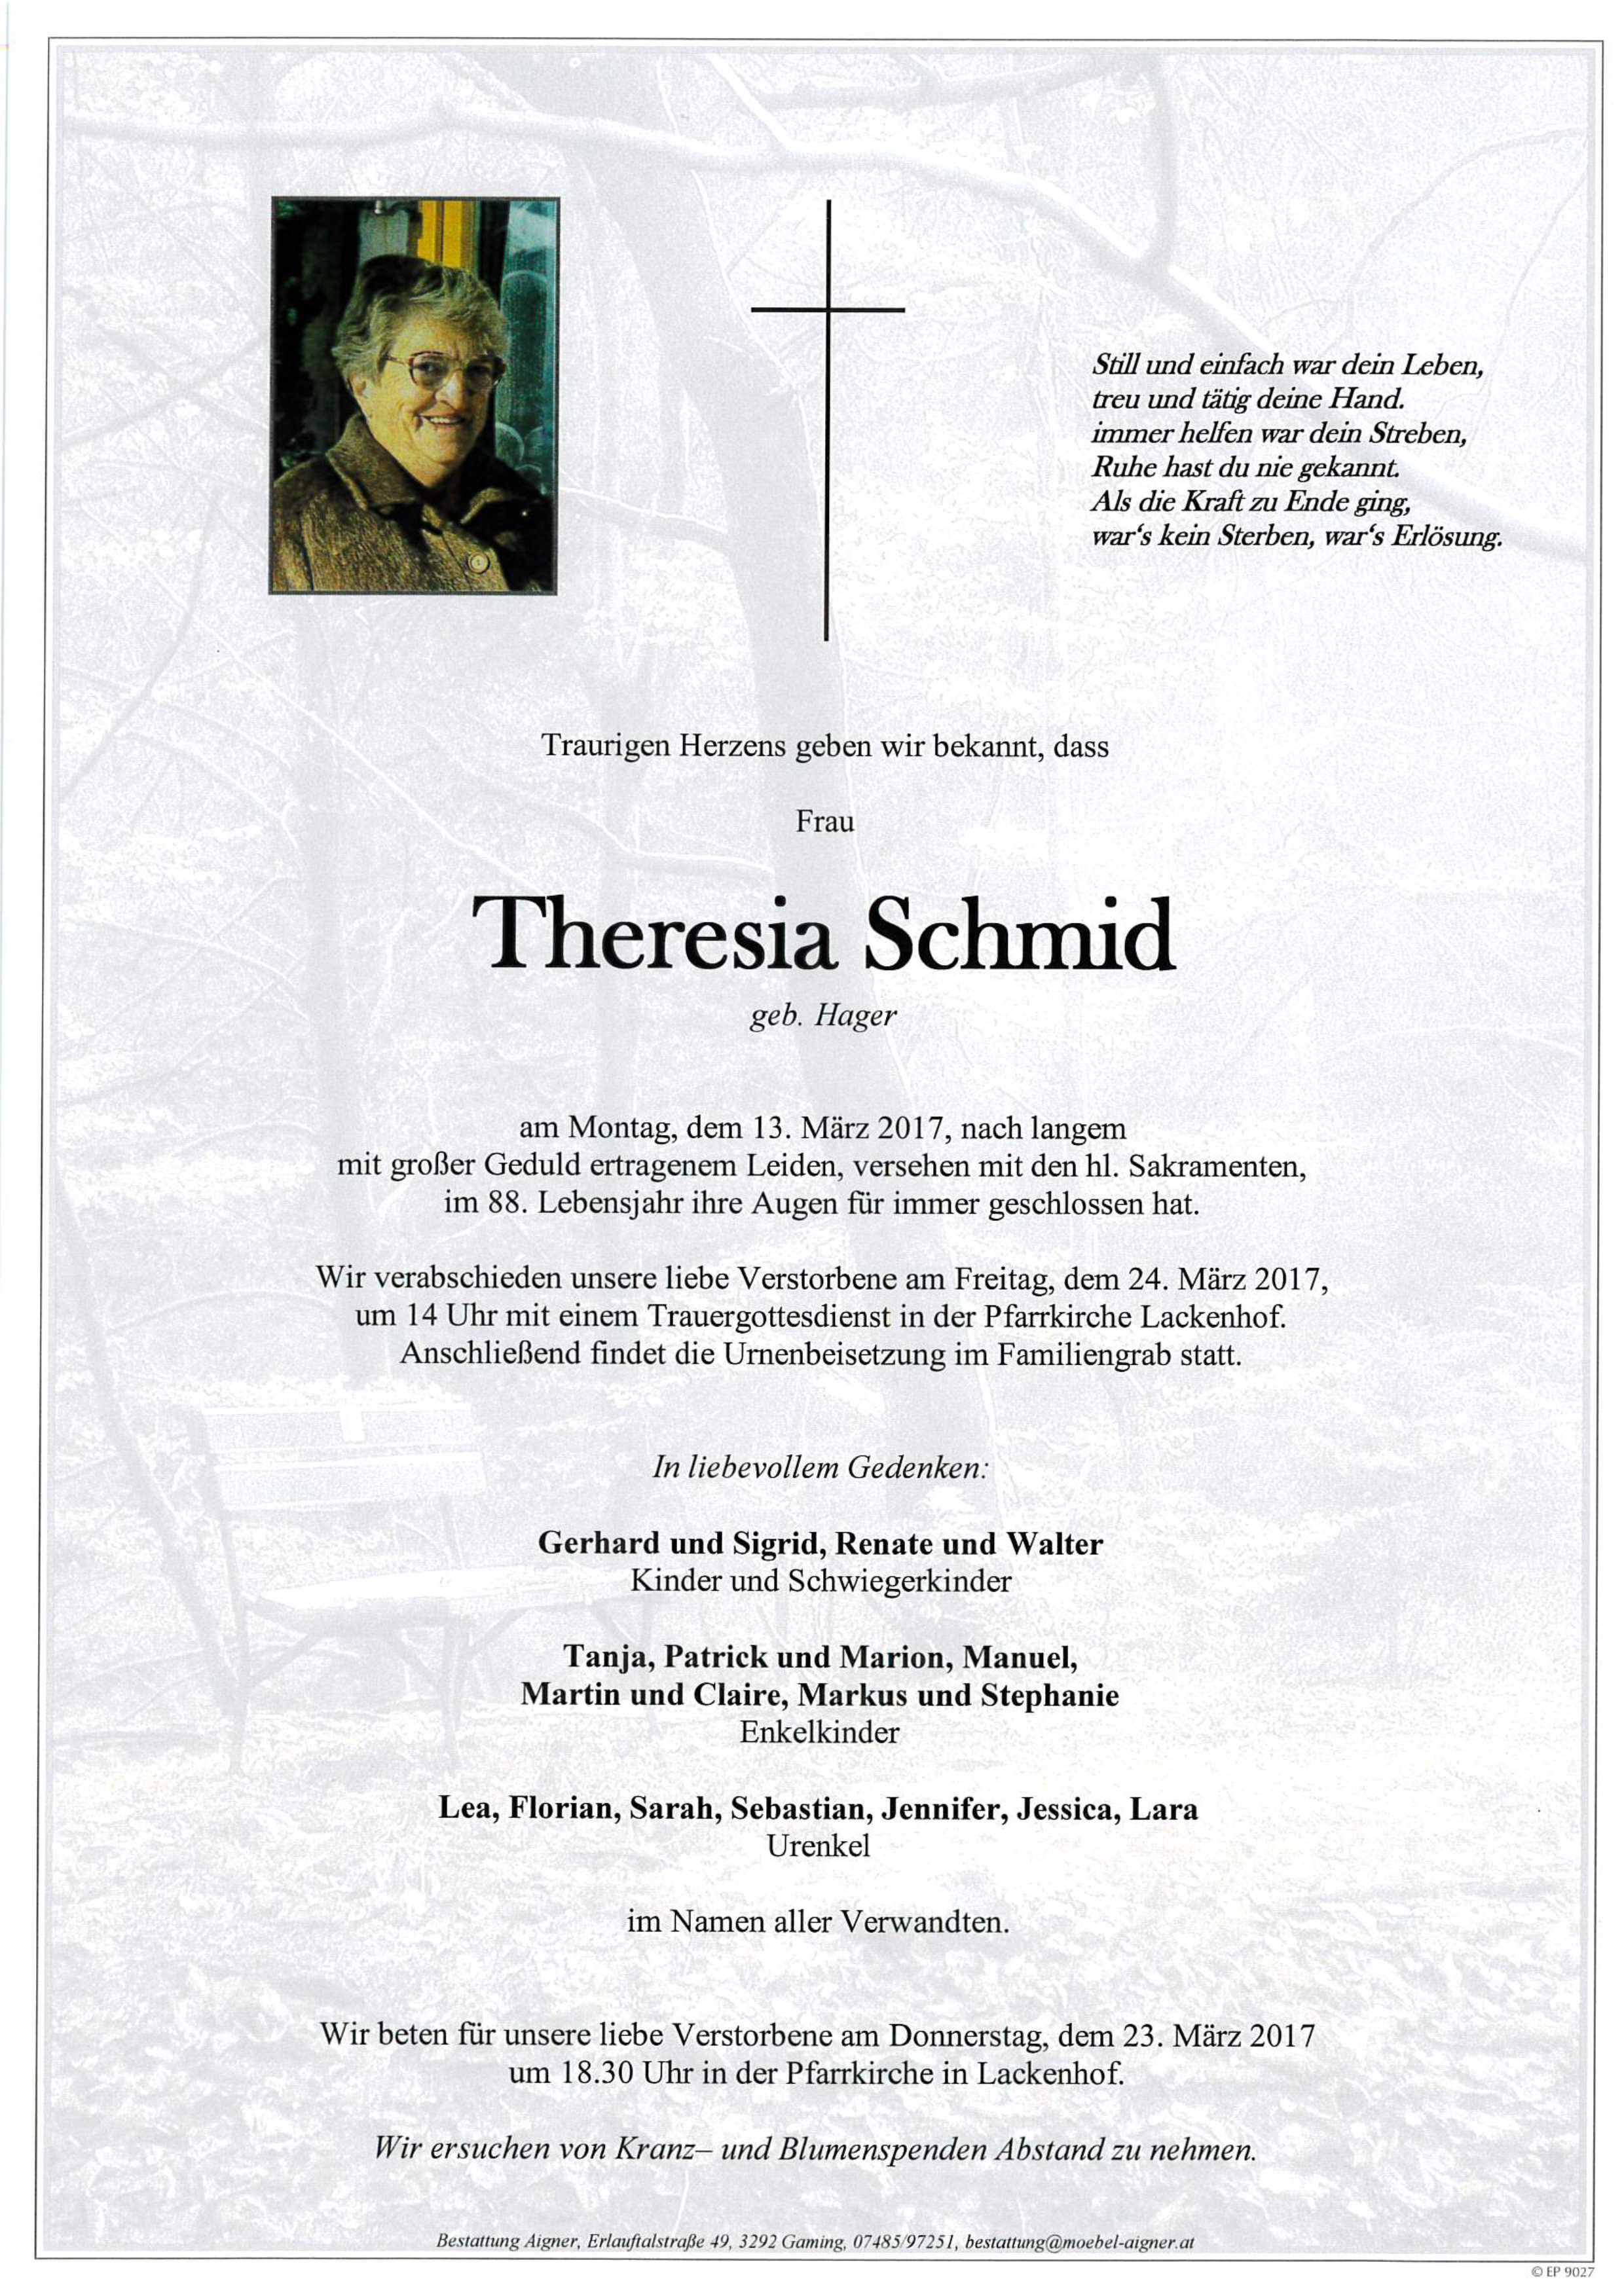 Theresia Schmid